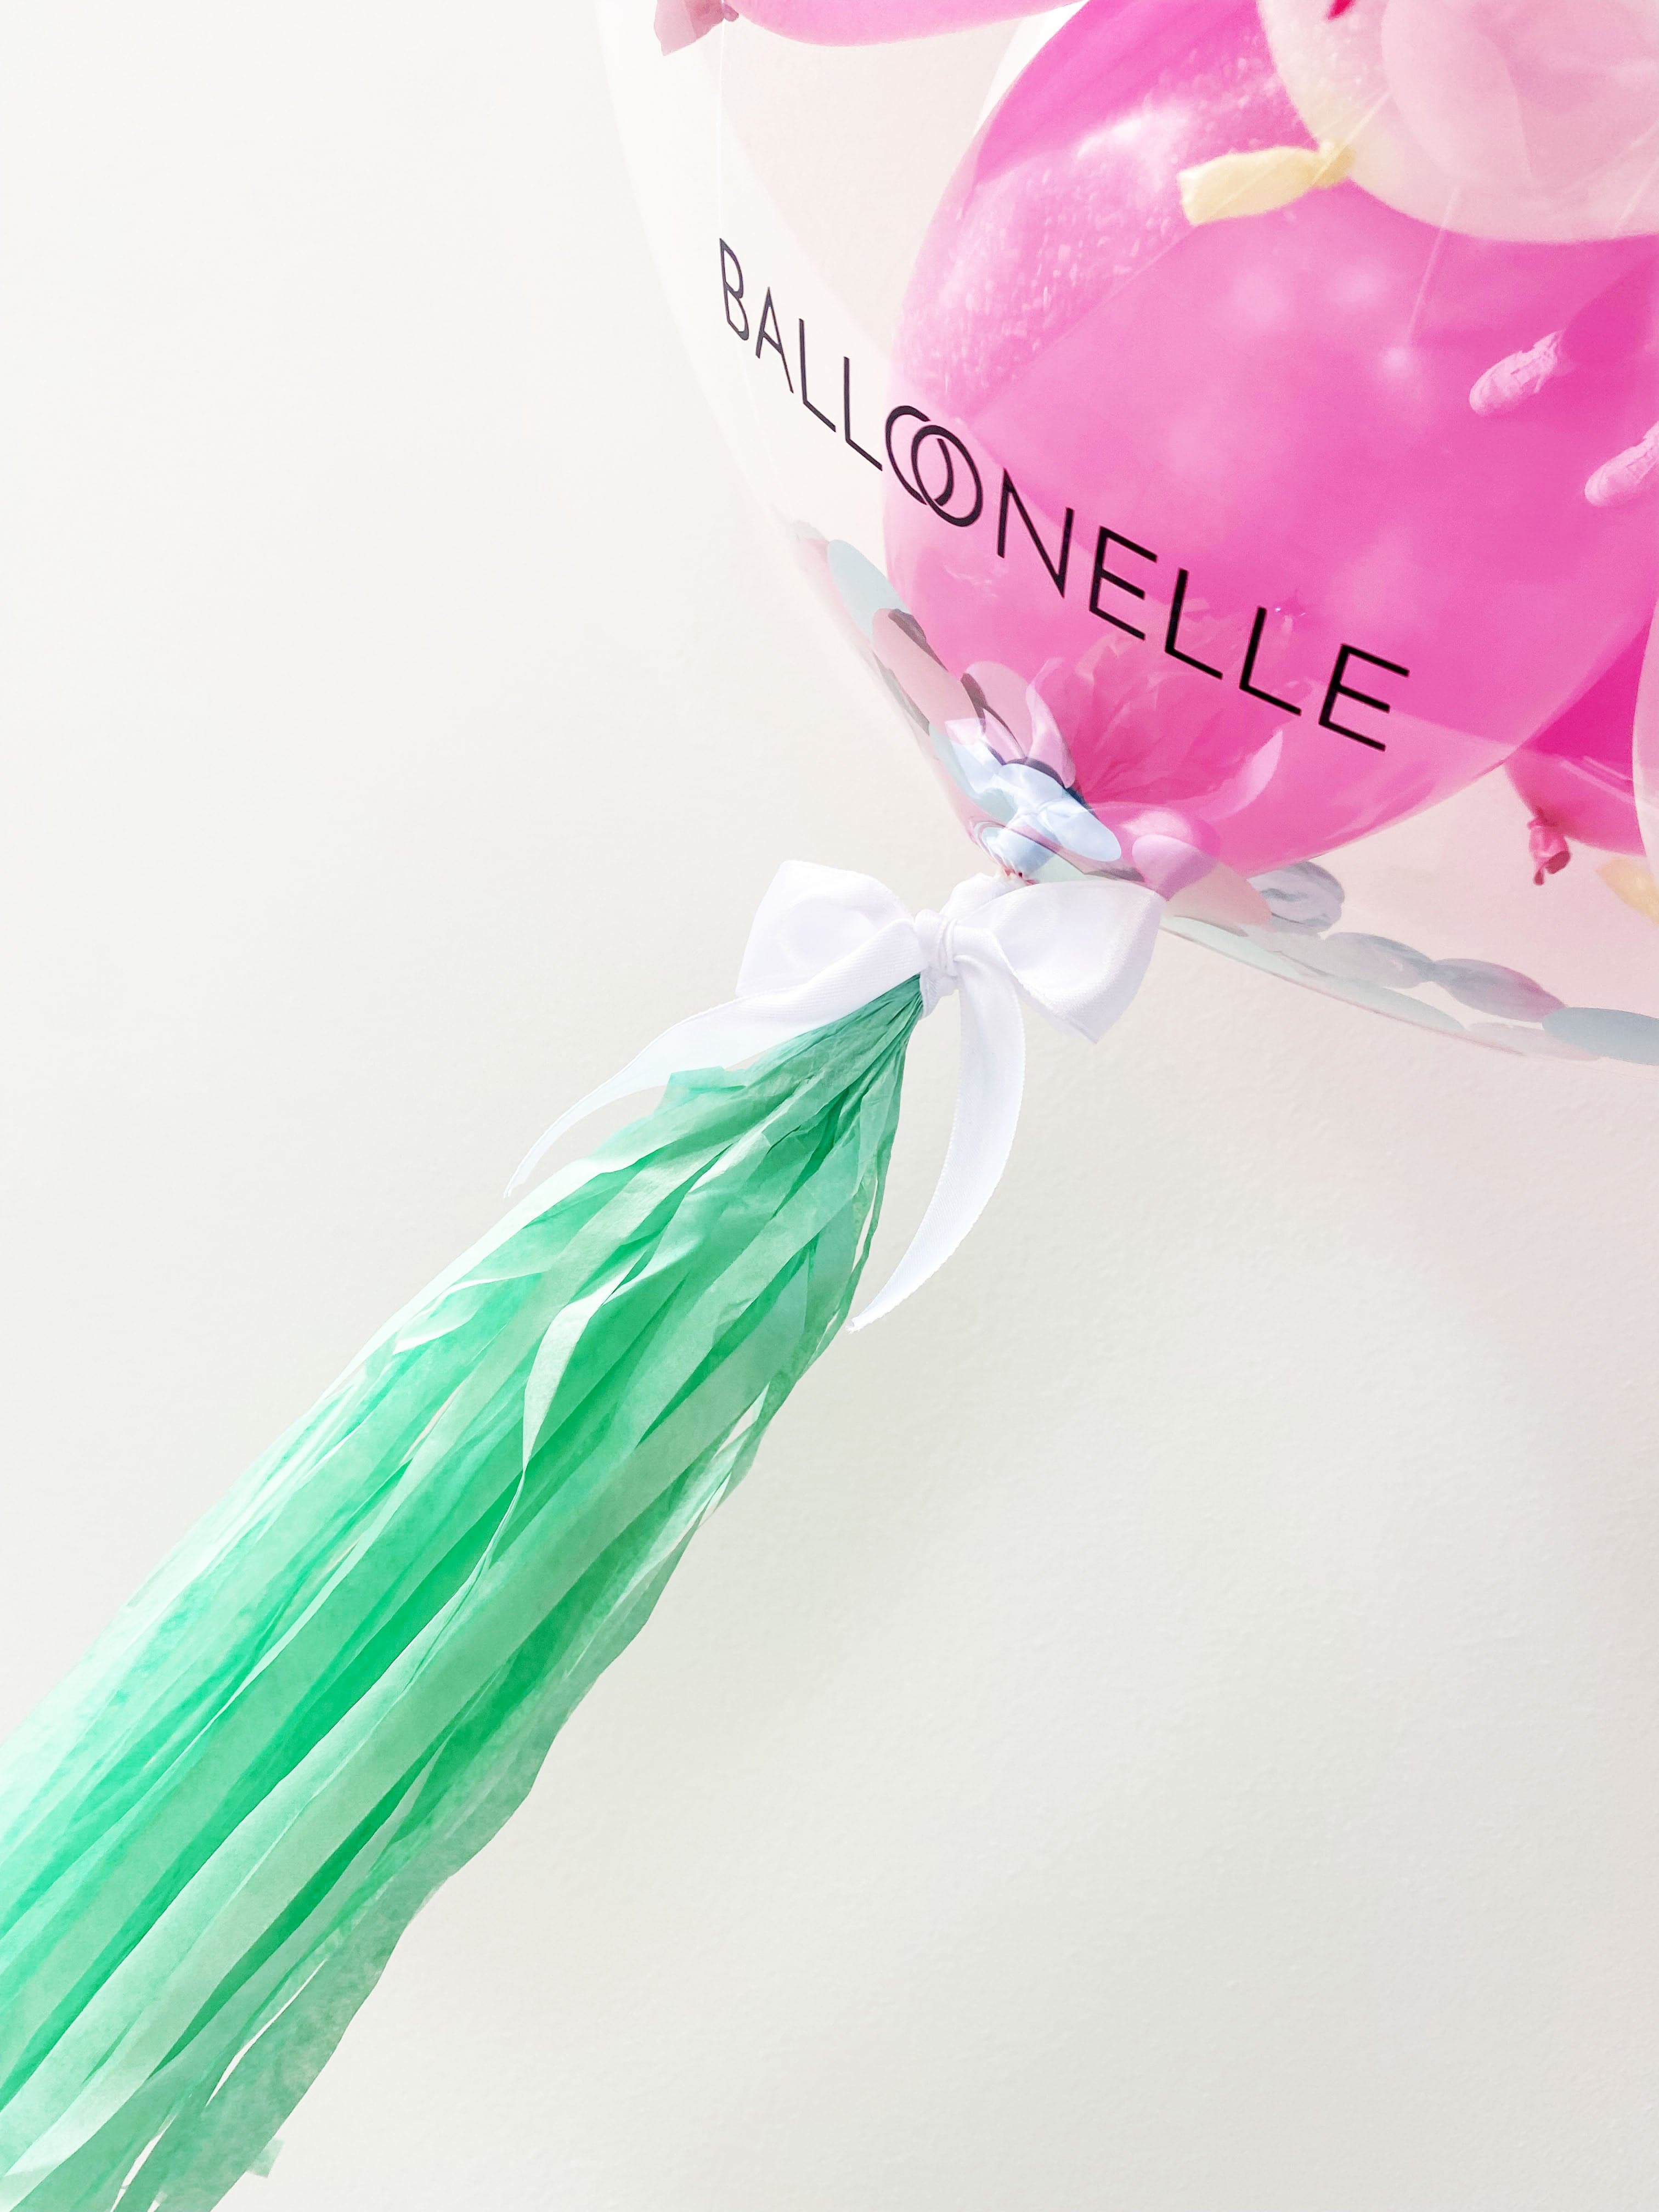 Schulkind Meerjungfrau Designer Ballon - BALLOONELLE